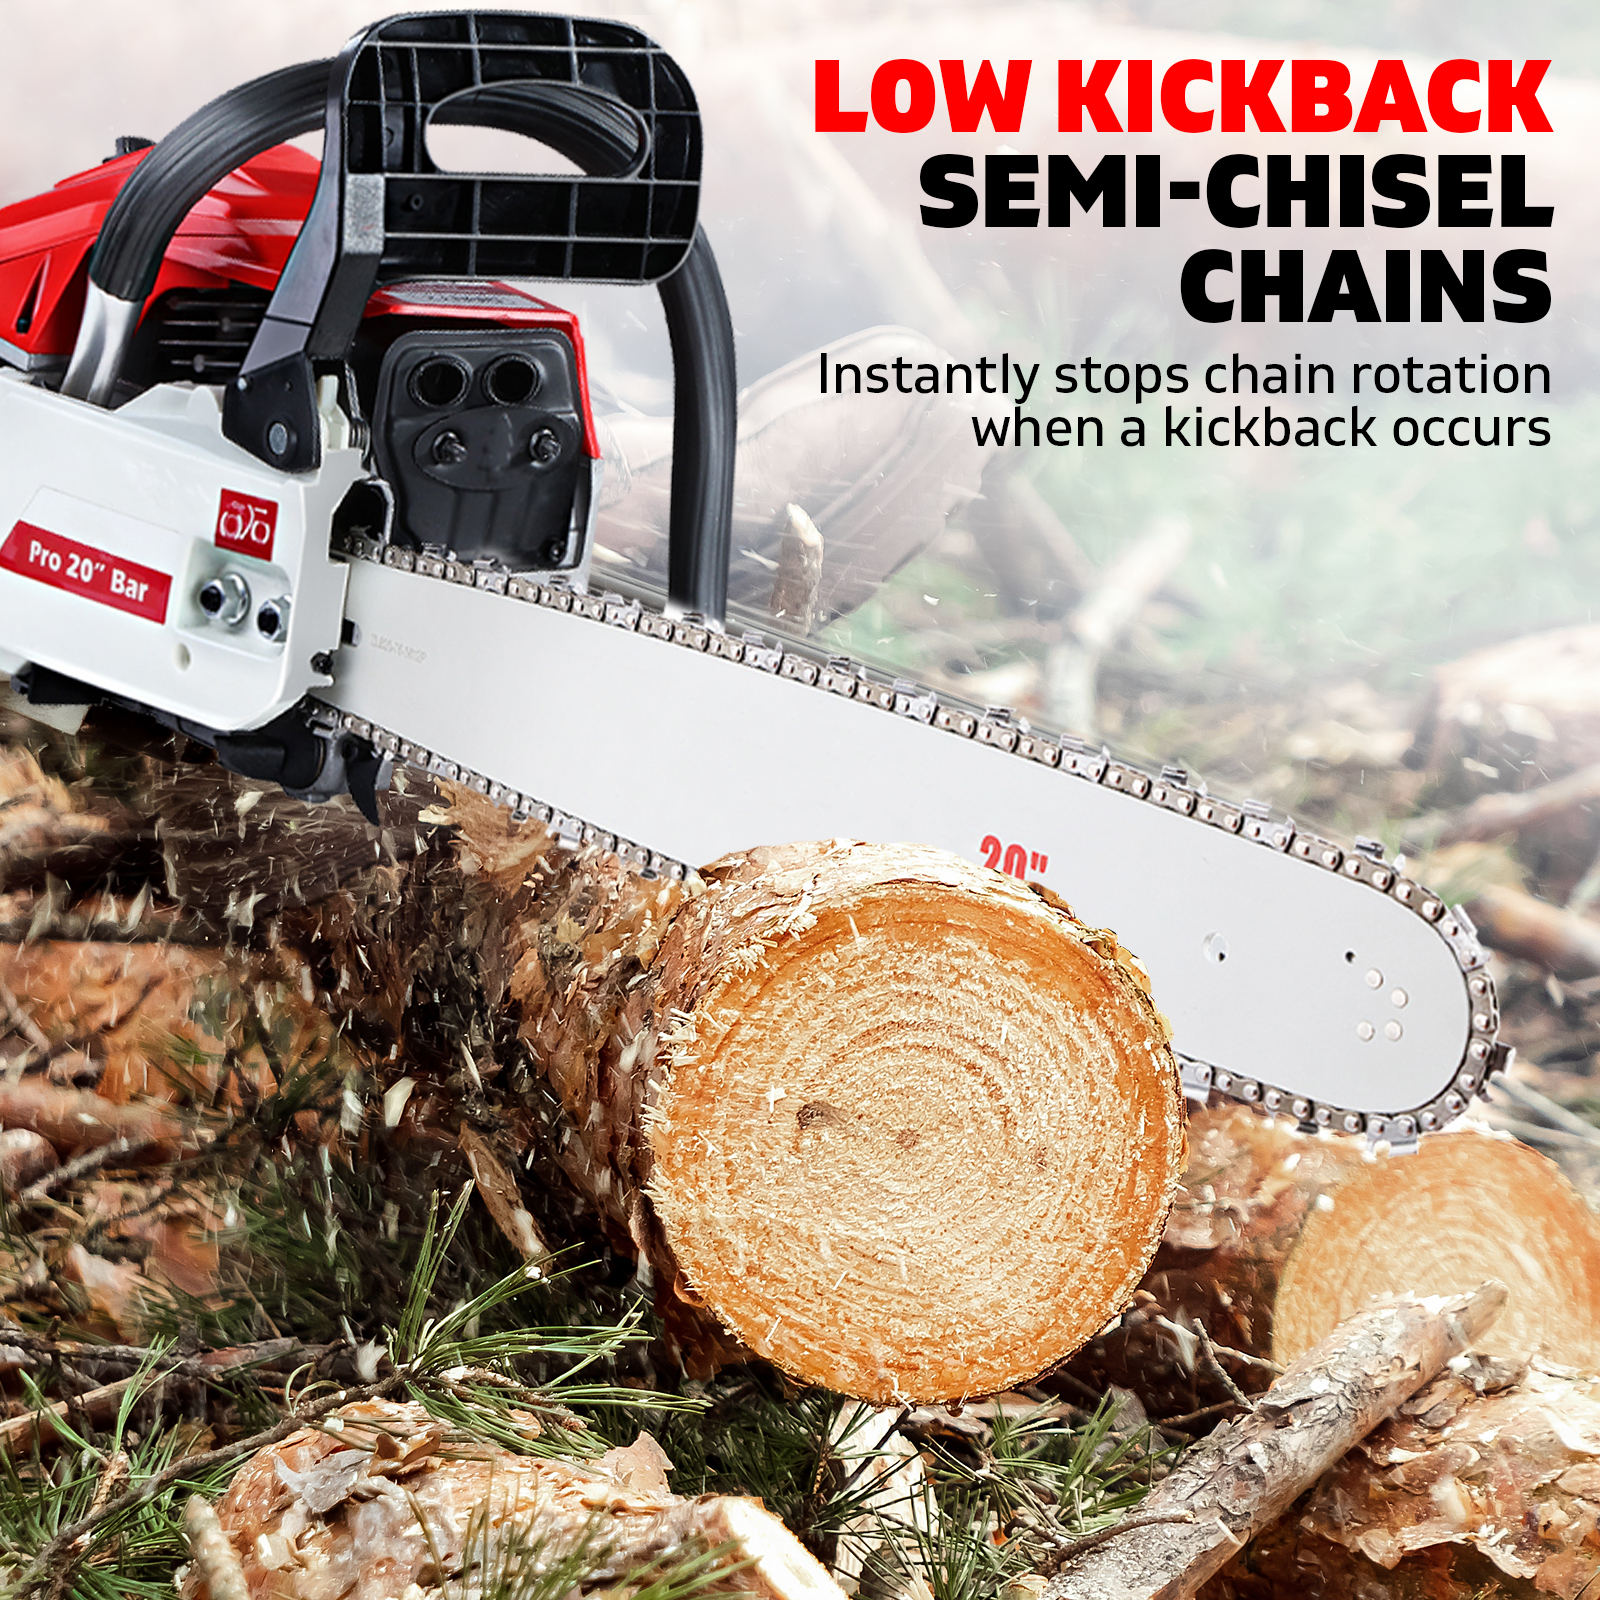 52CC Petrol 2-stroke Premium Commercial Chainsaw Chain Saw Bar E-Start Pruning